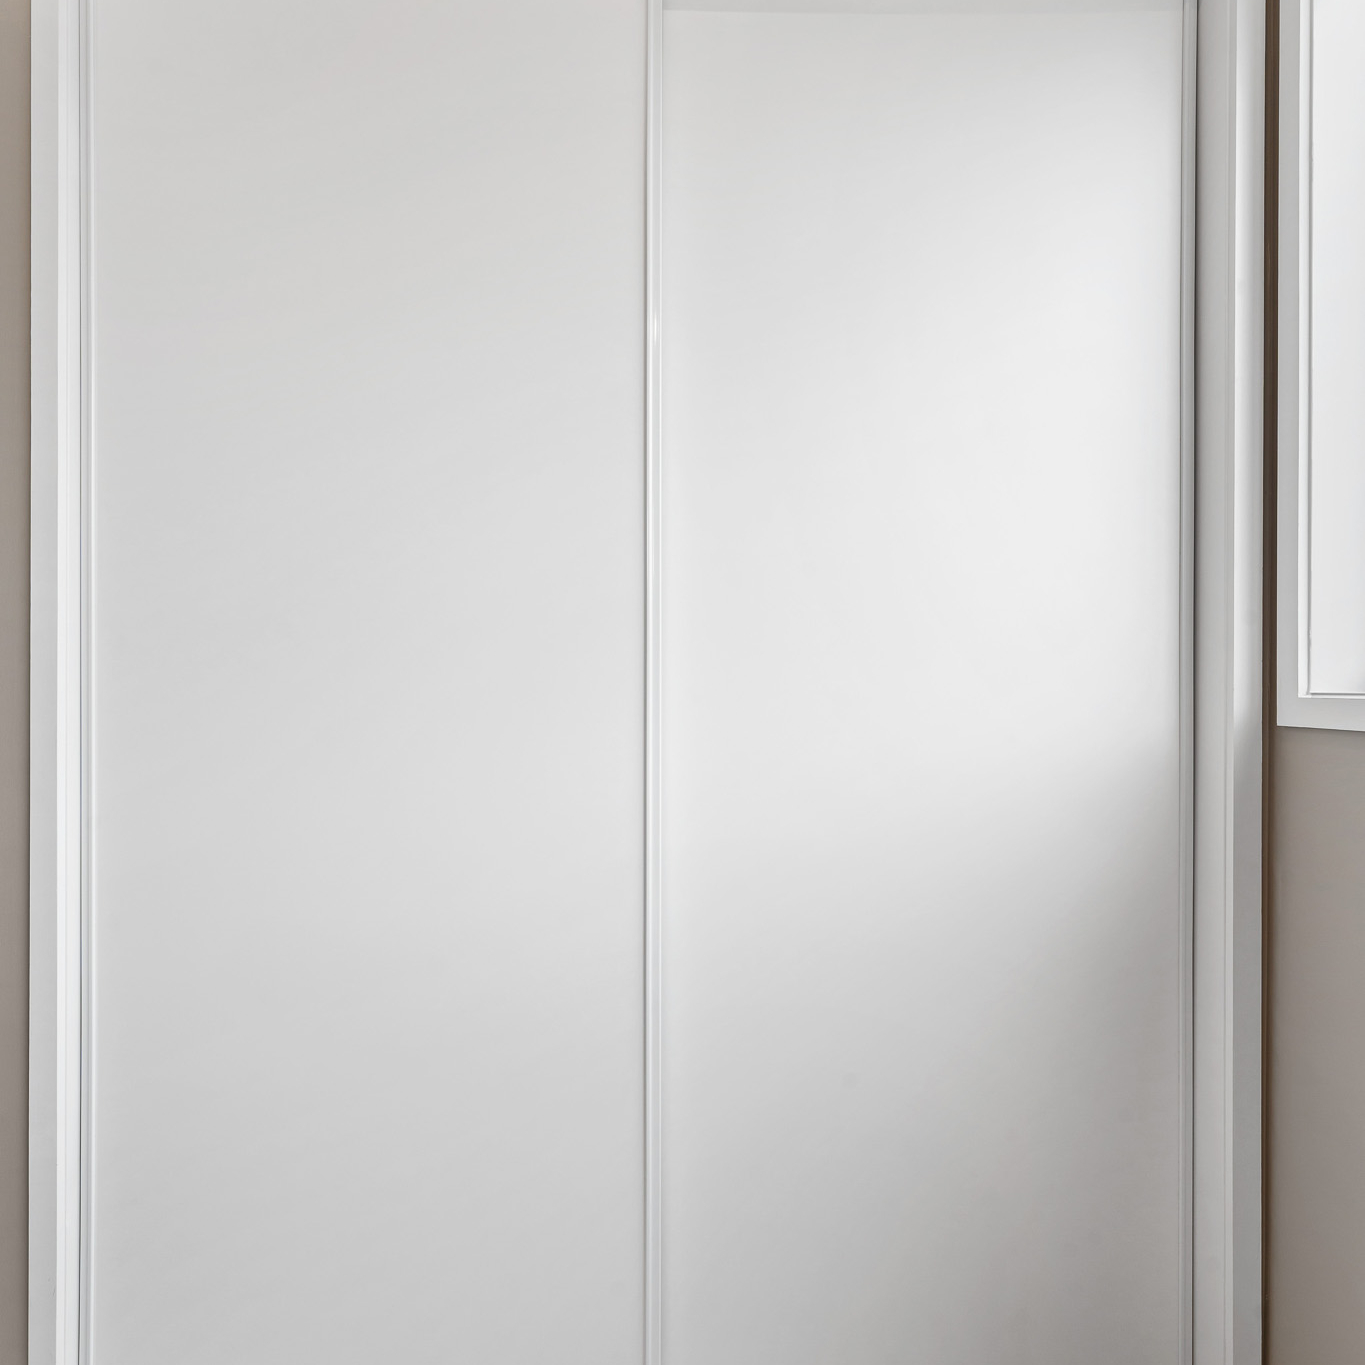 White Aristo sliding wardrobe doors, closed